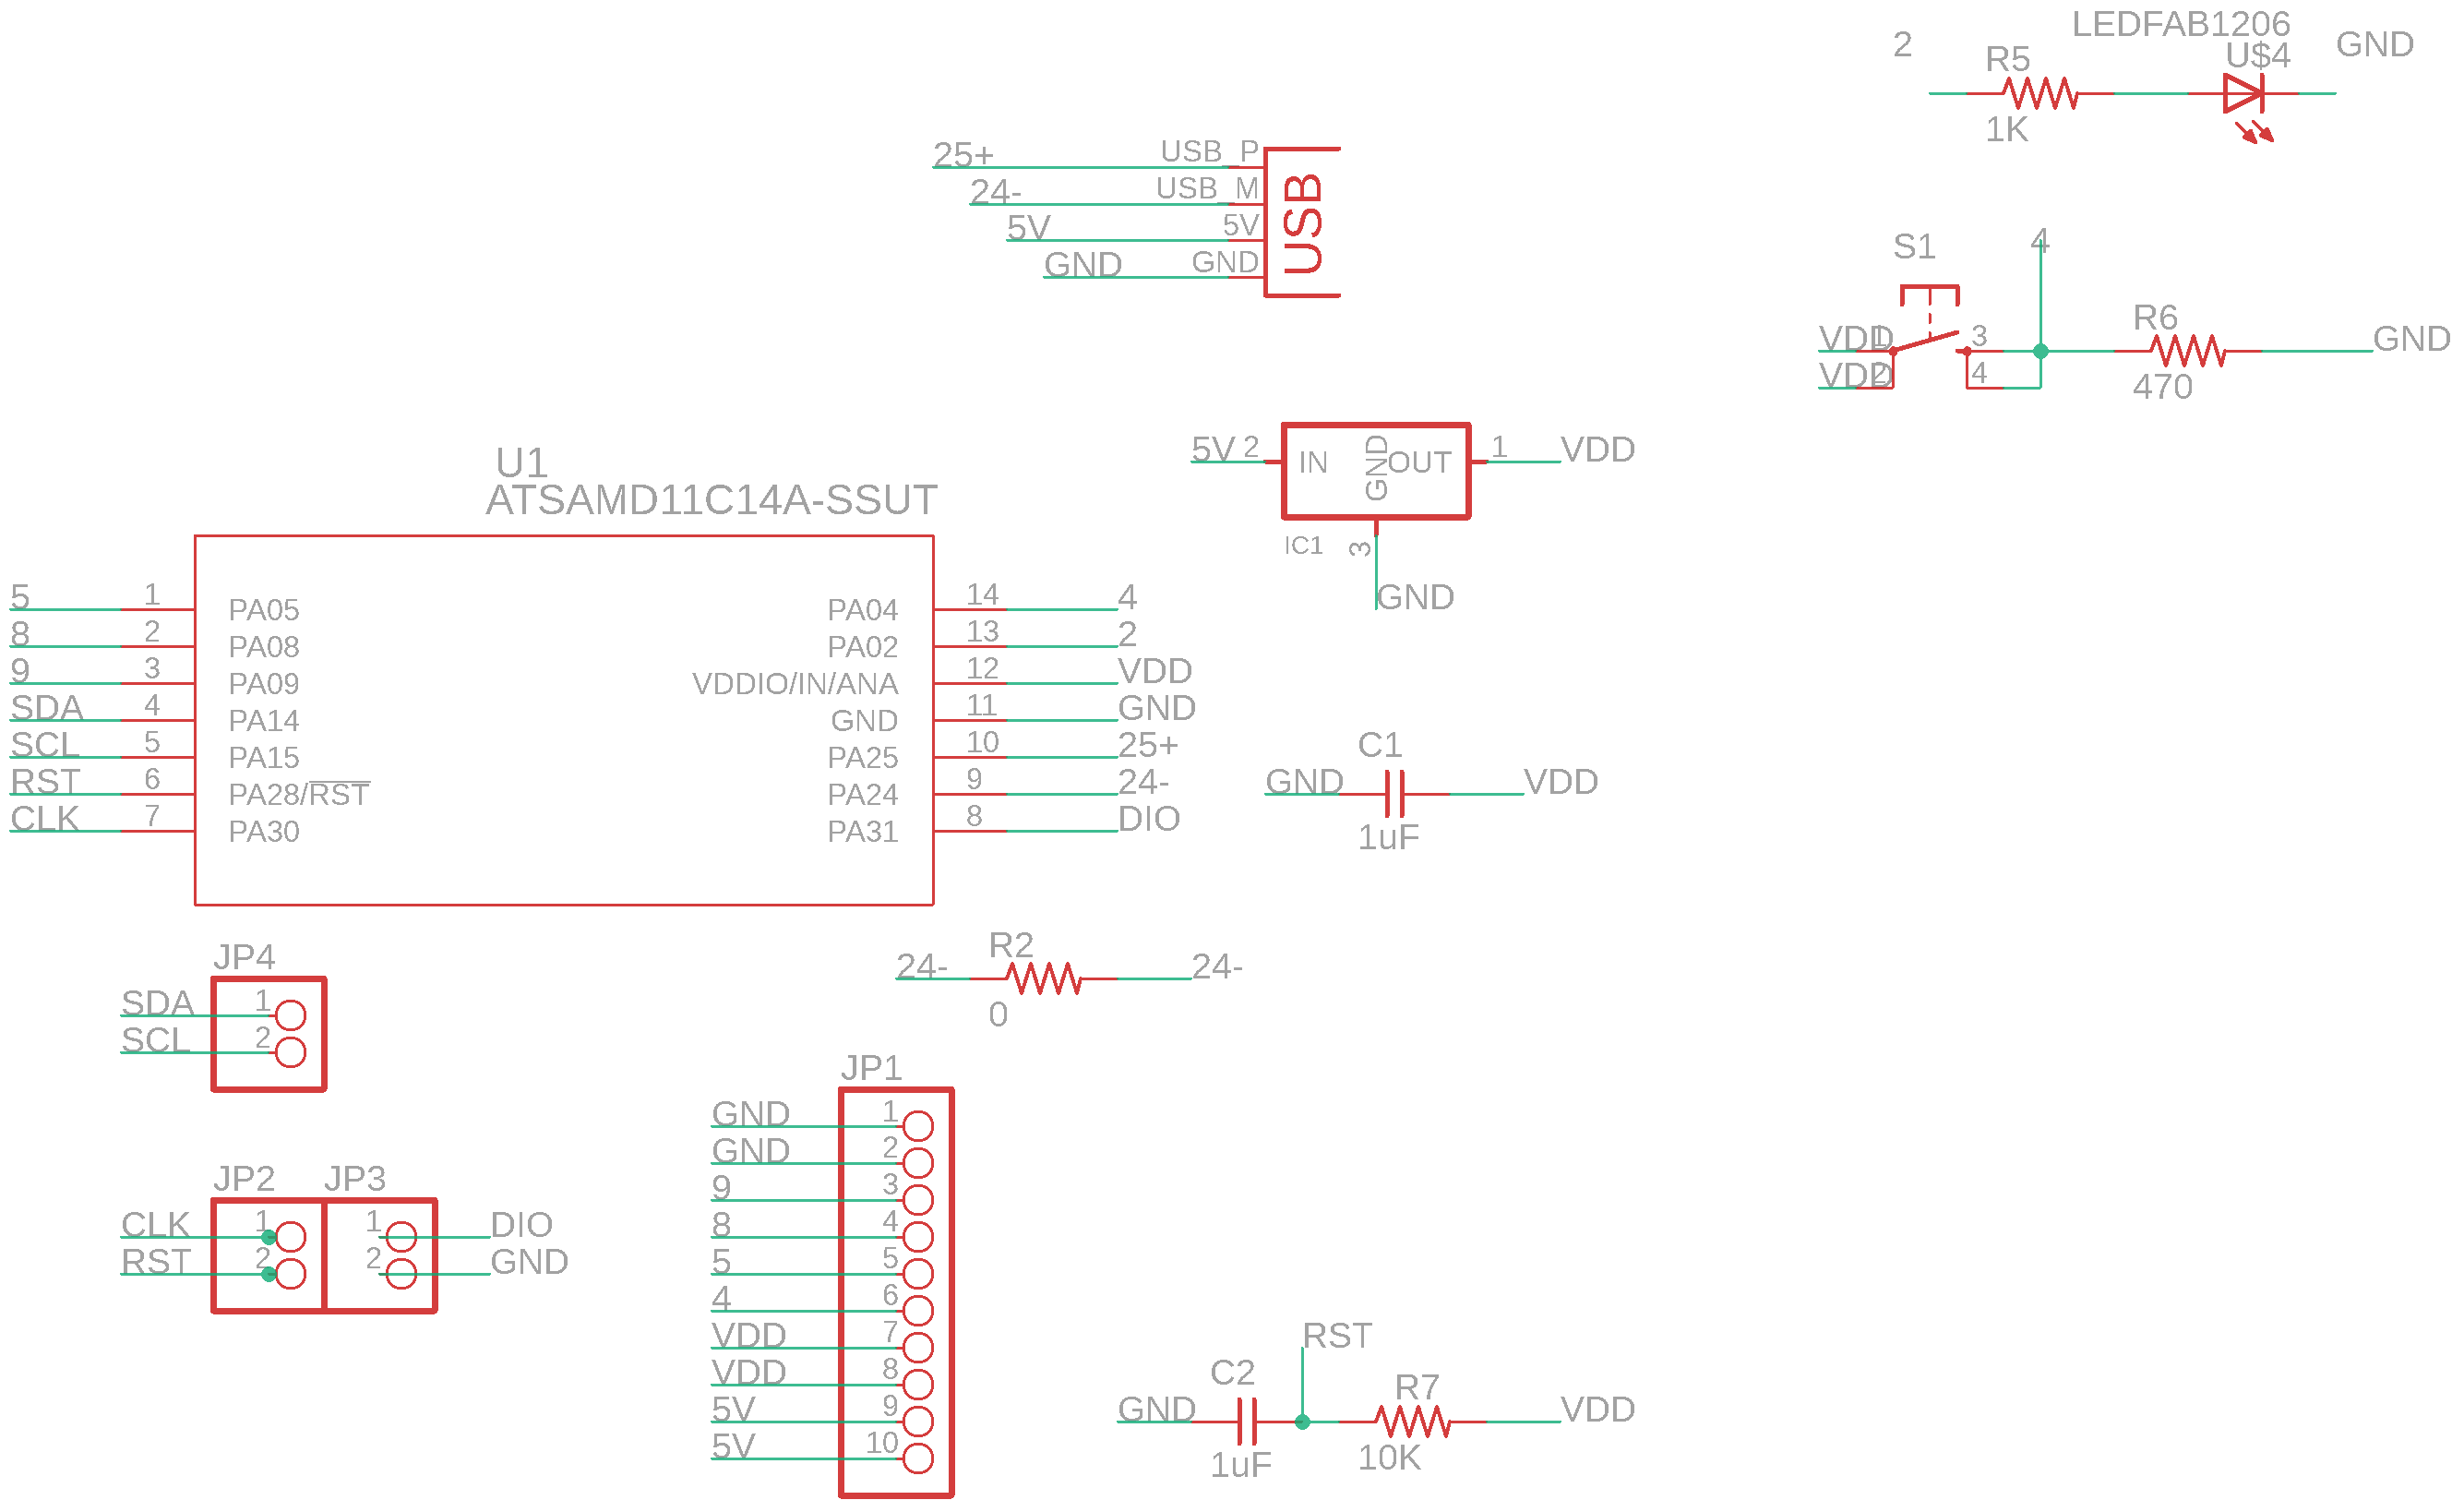 SAMD11c board schematic